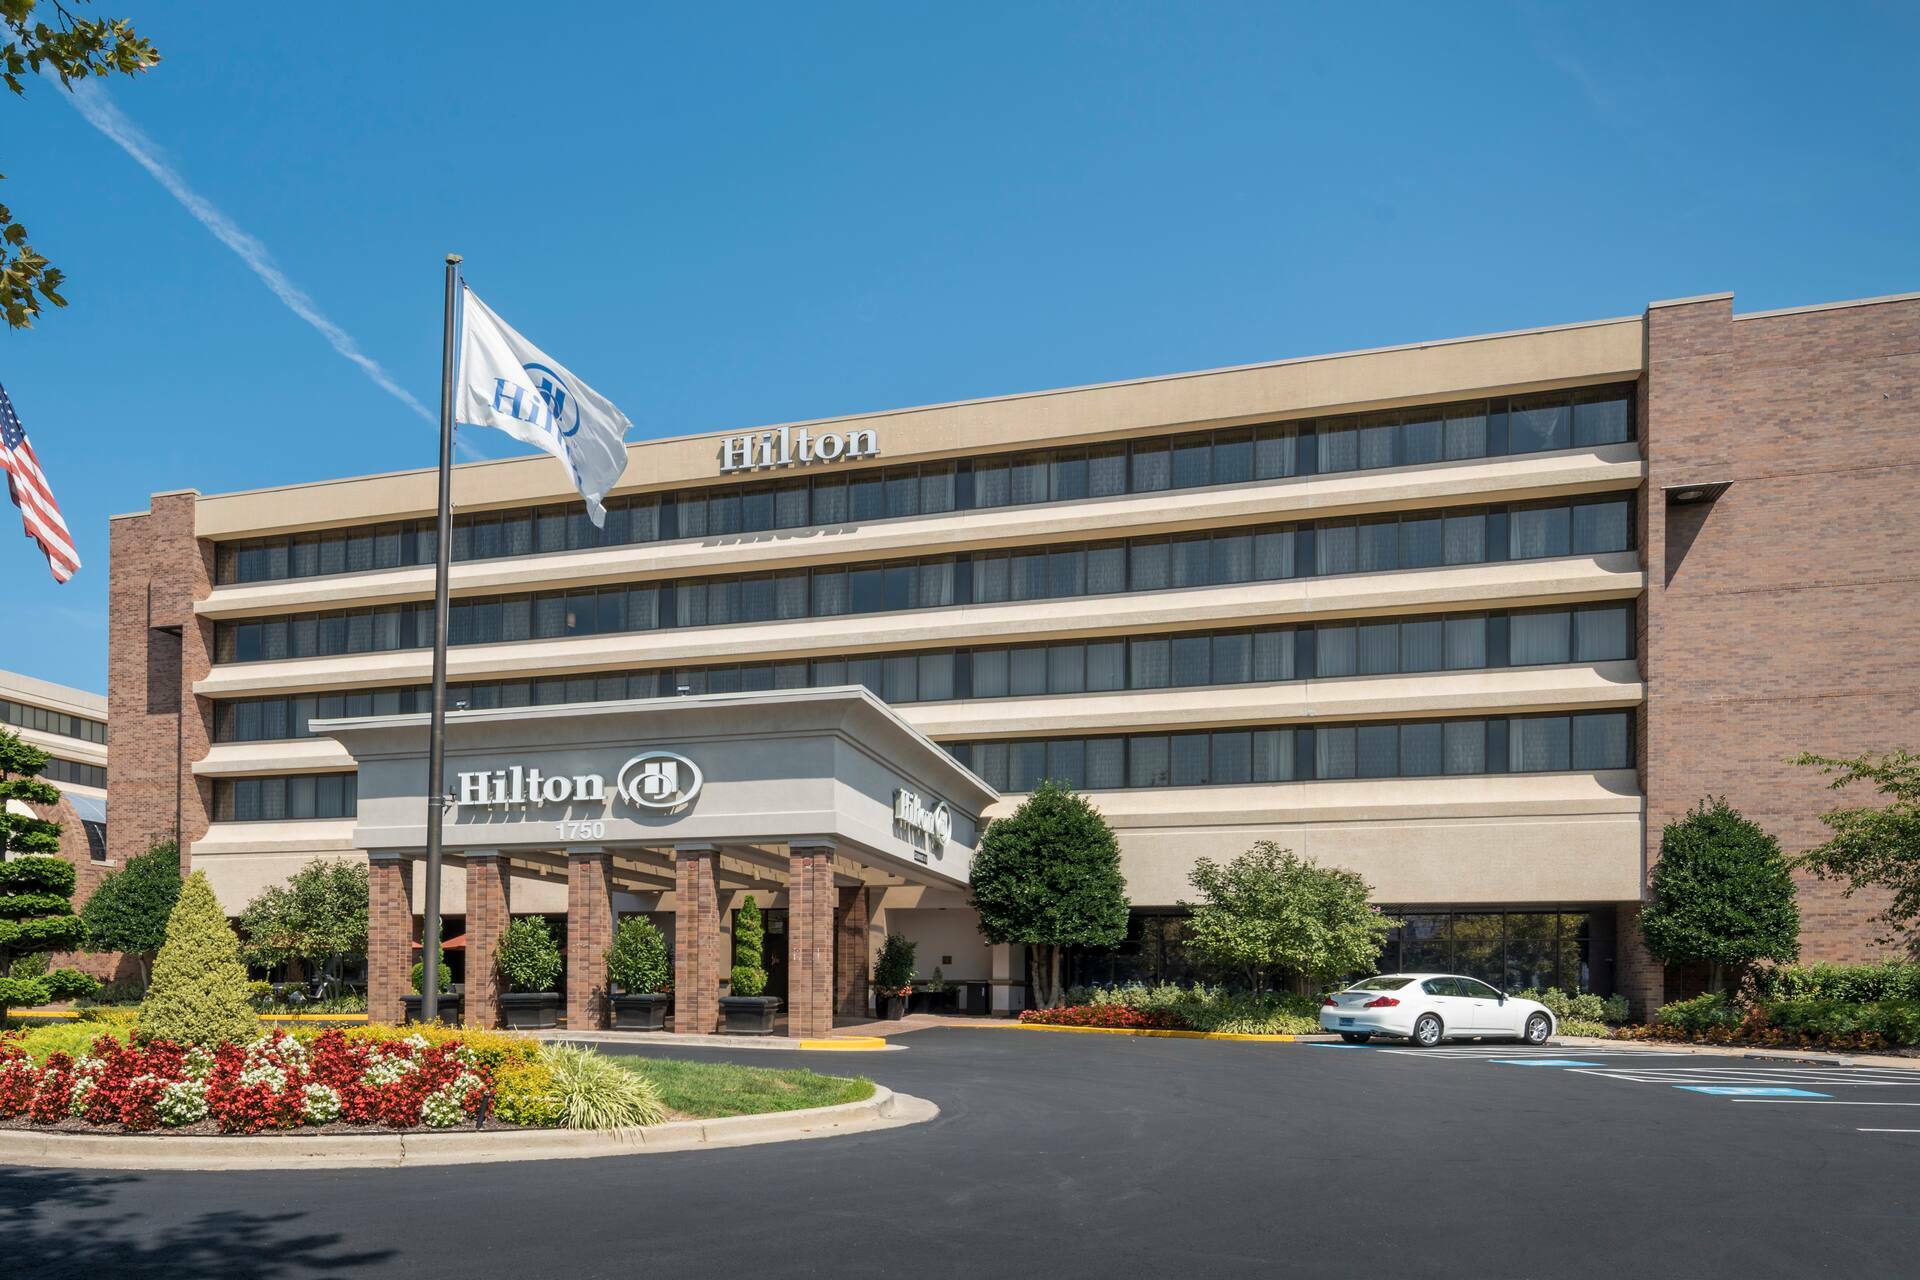 Photo of Hilton Washington DC/Rockville Hotel & Executive Meeting Center, Rockville, MD